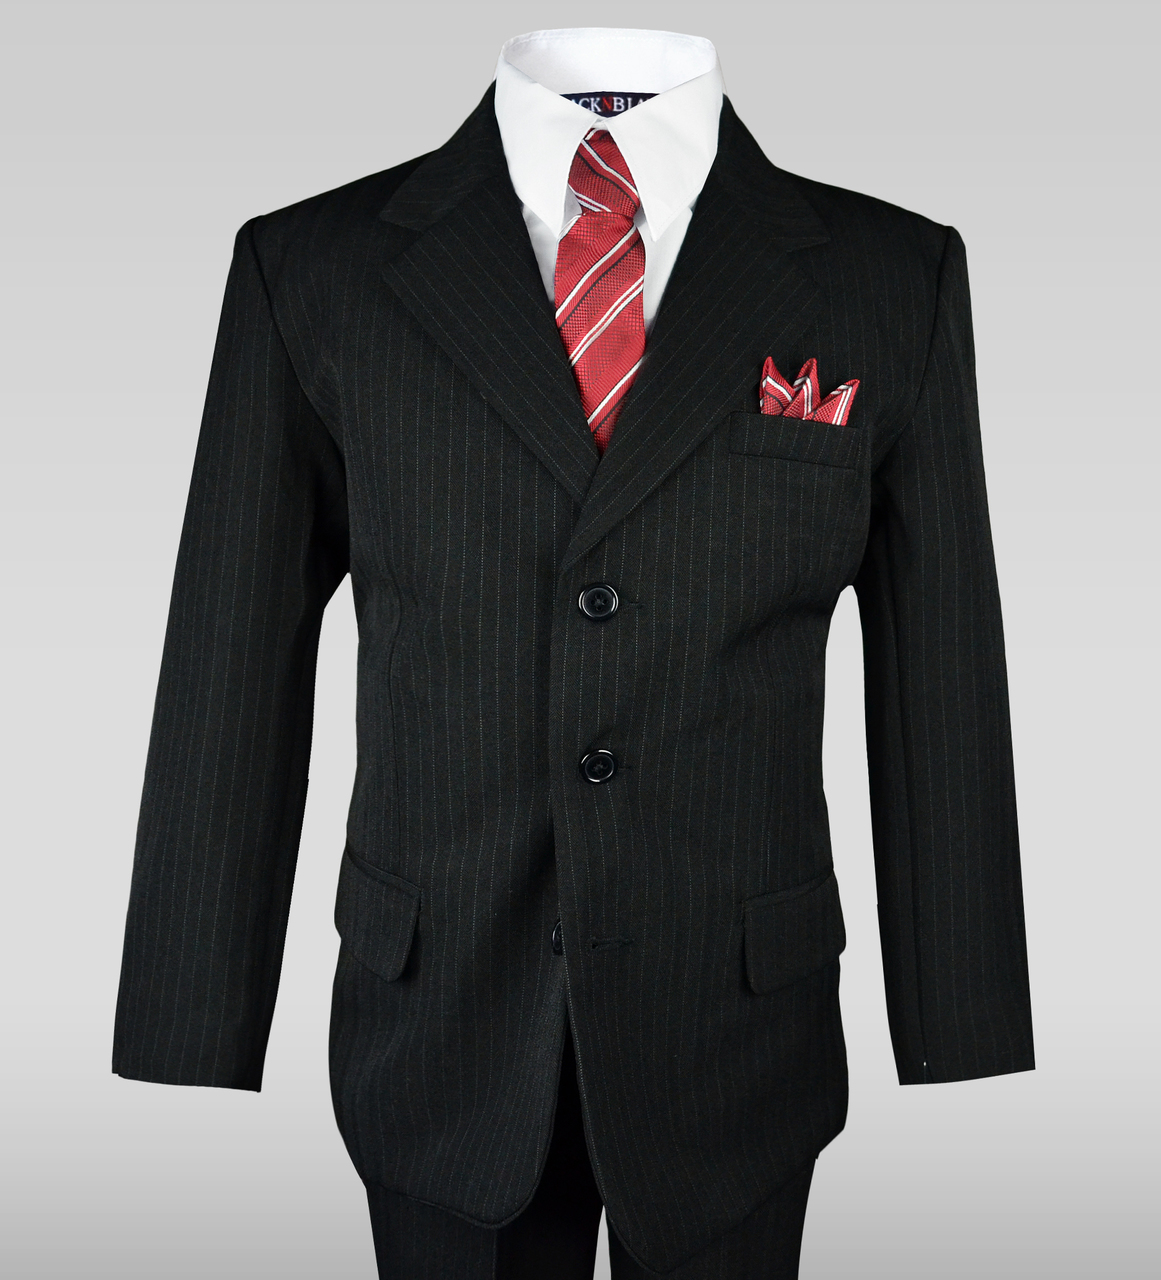 Boys Pinstripe Suit in Black with Dark Red Tie Size 2-20 6 (+$5)